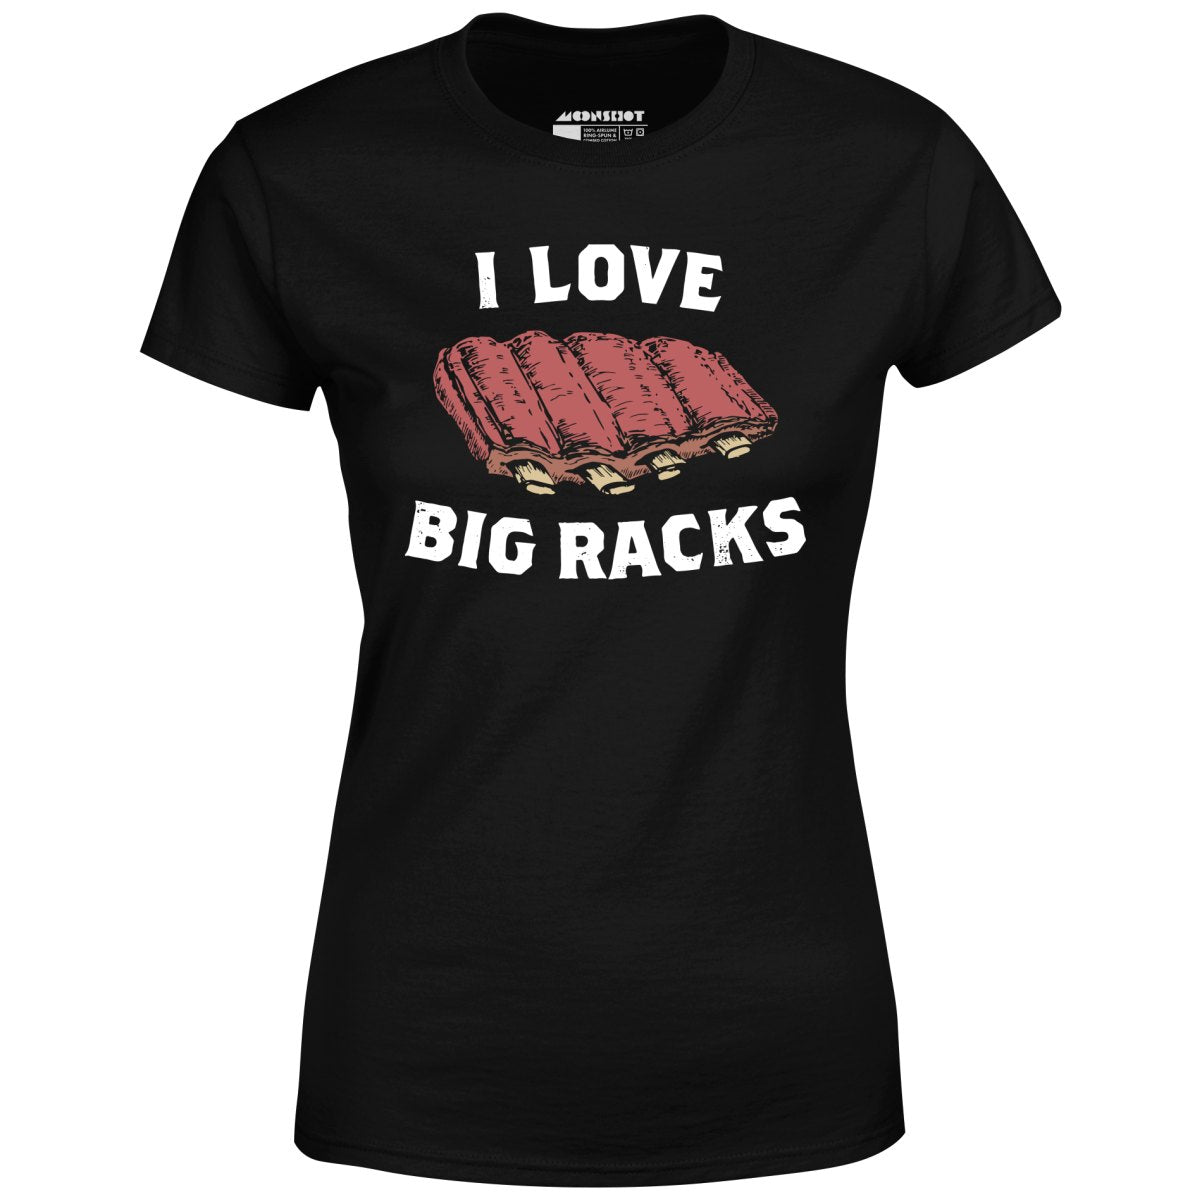 I Love Big Racks - Women's T-Shirt